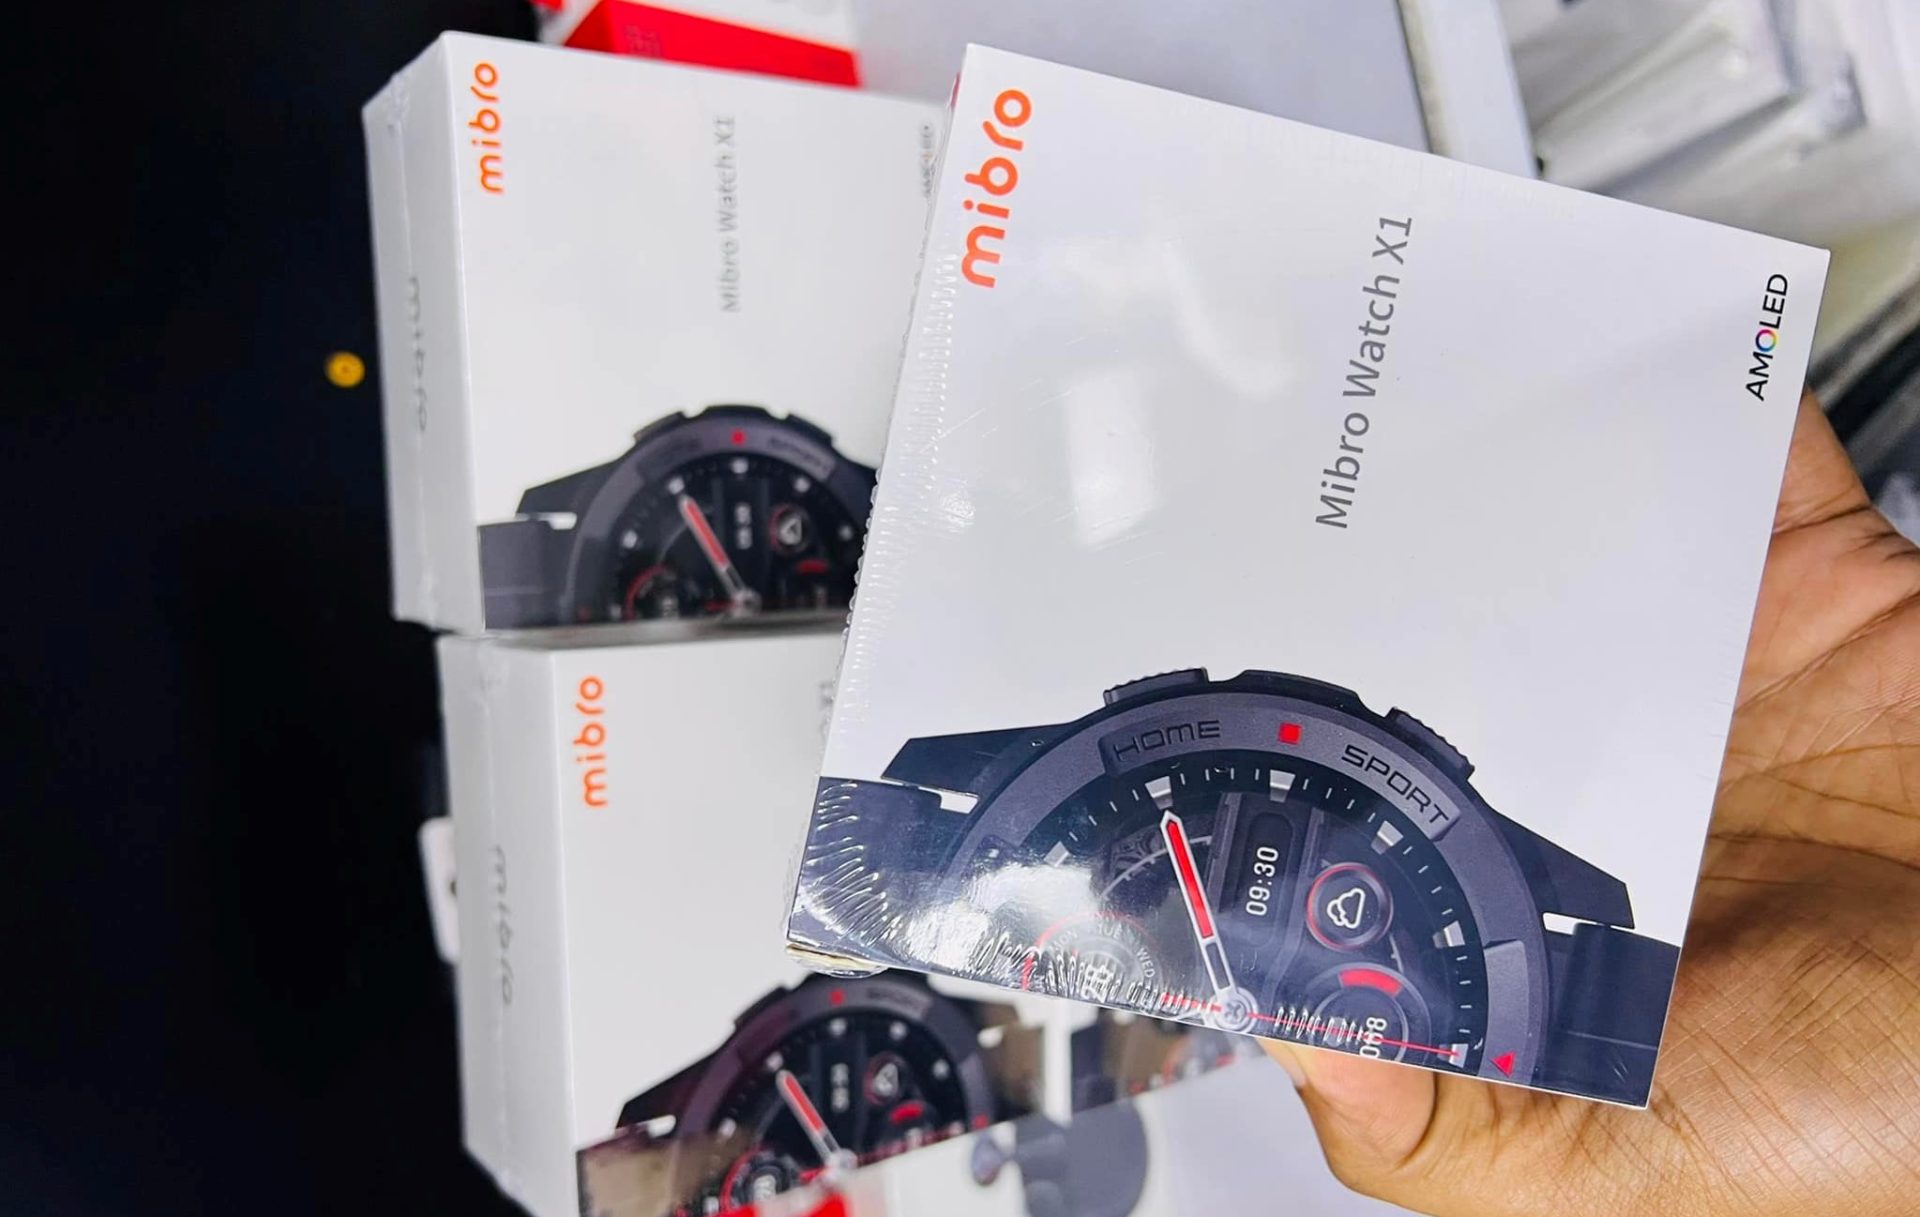 mibro-x1-smartwatch-review